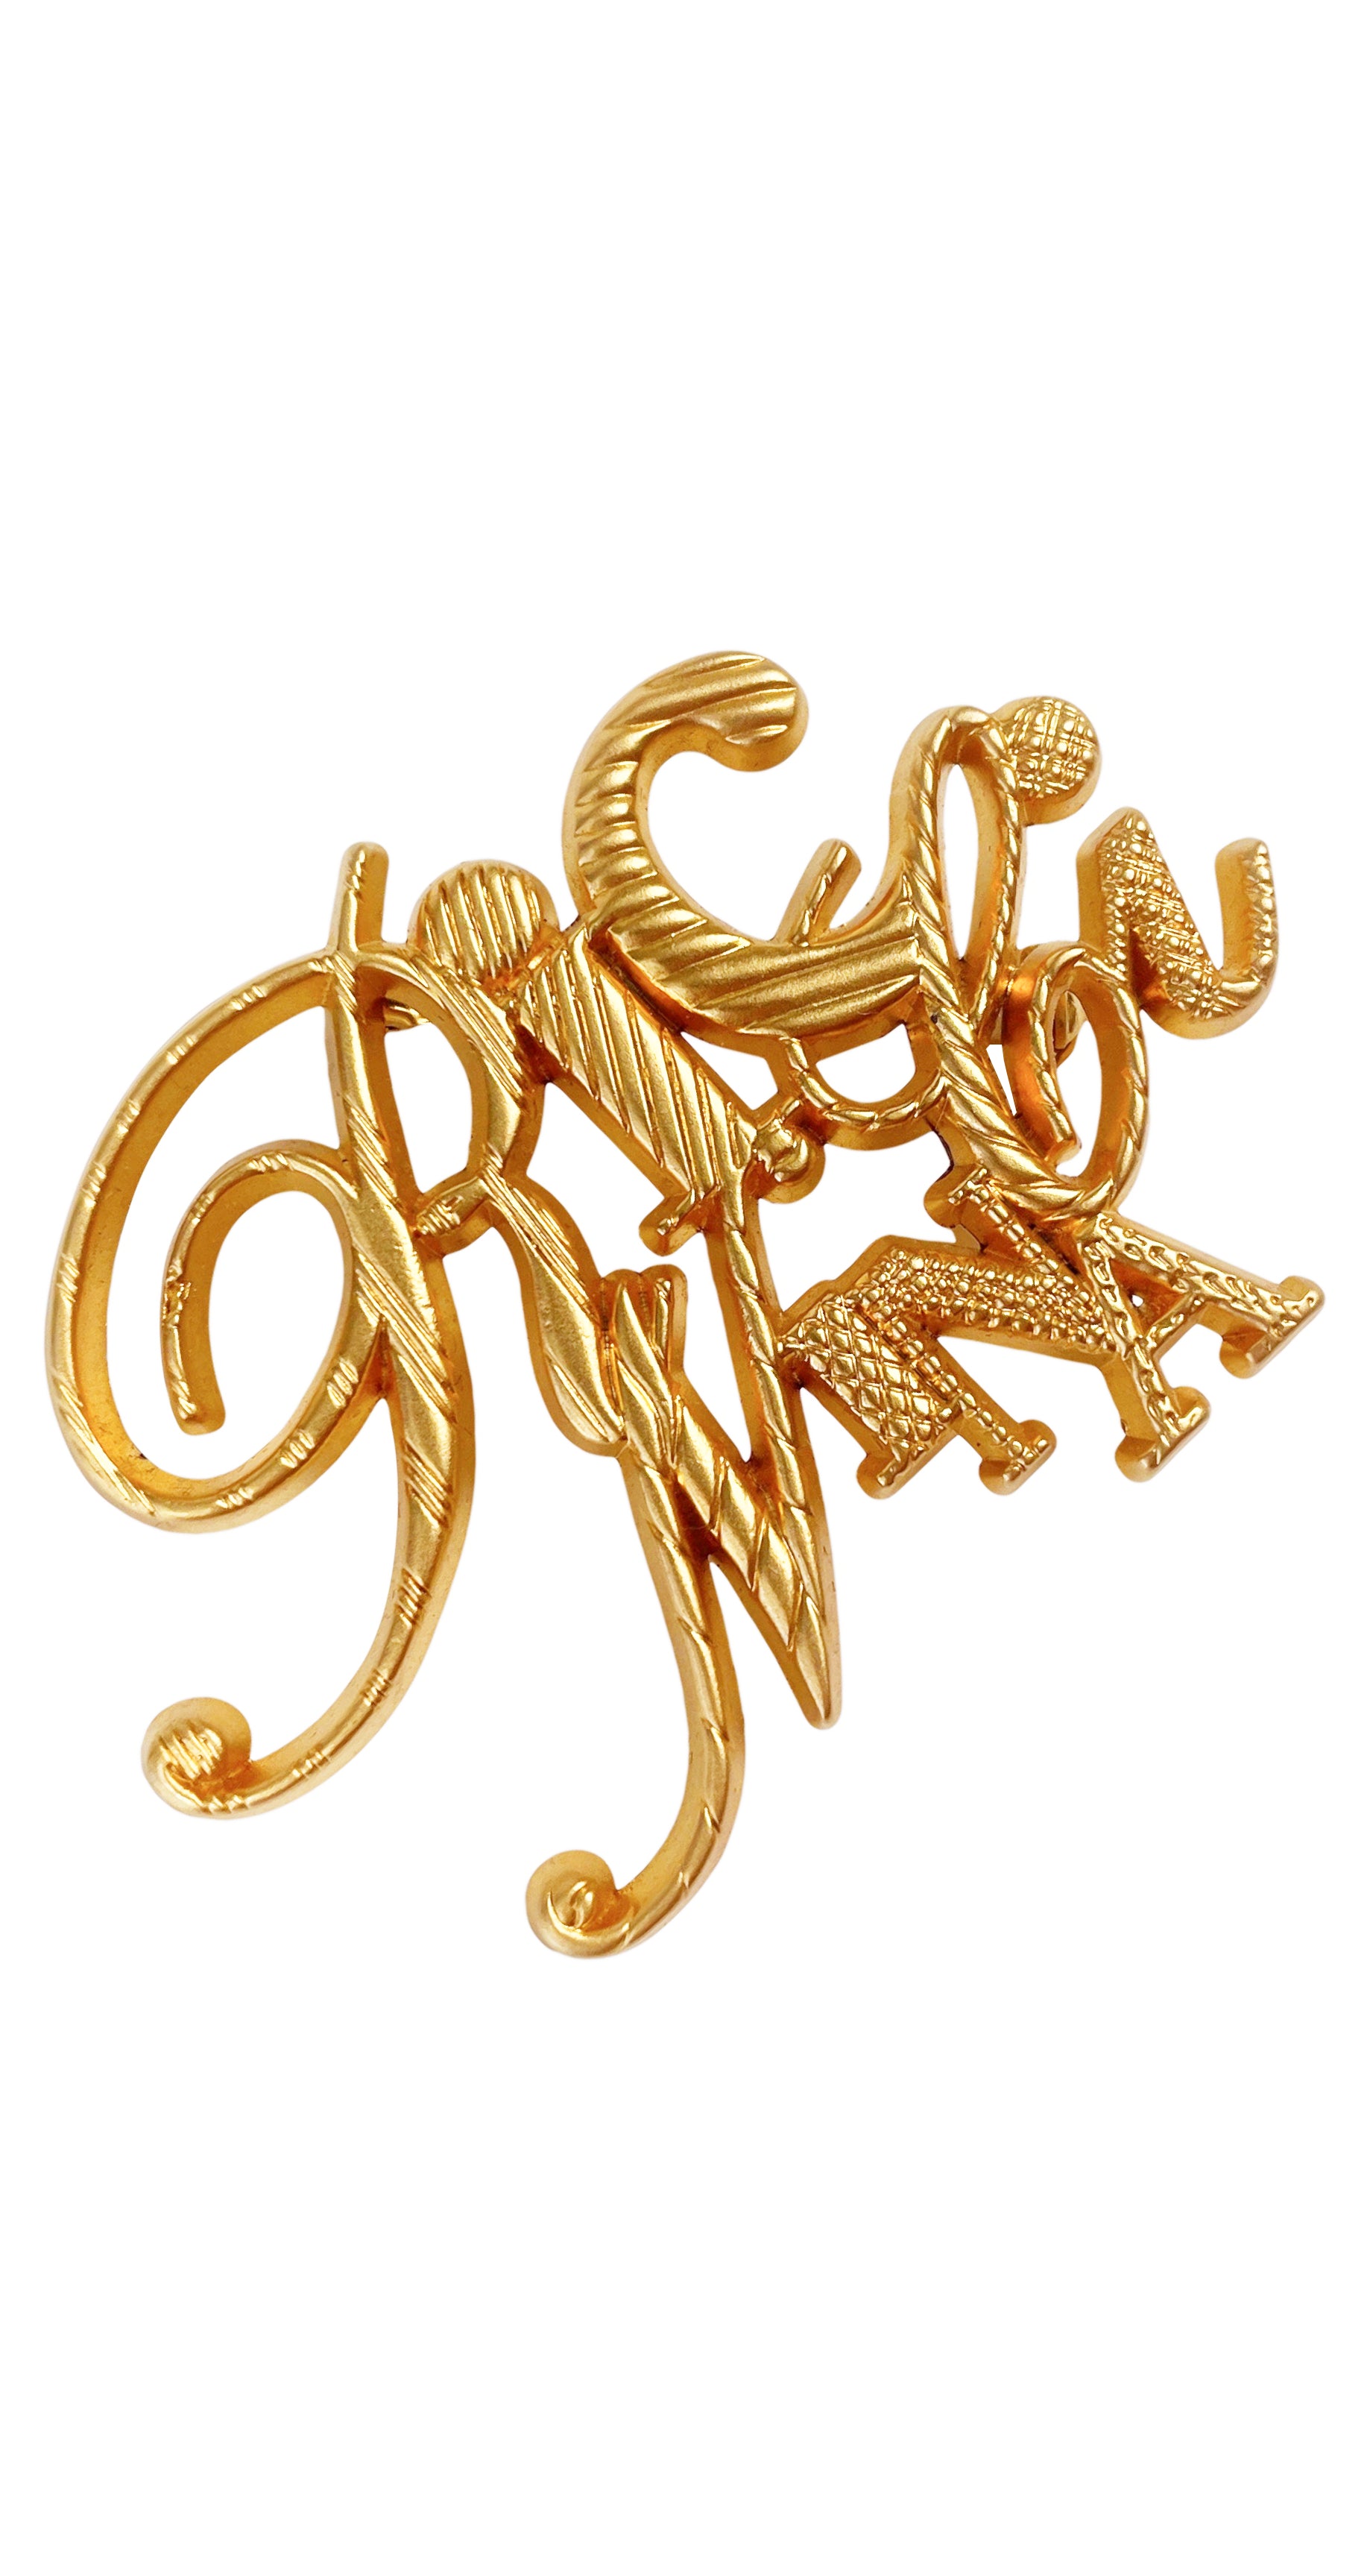 1990s Signature Gold-Tone Metal Brooch